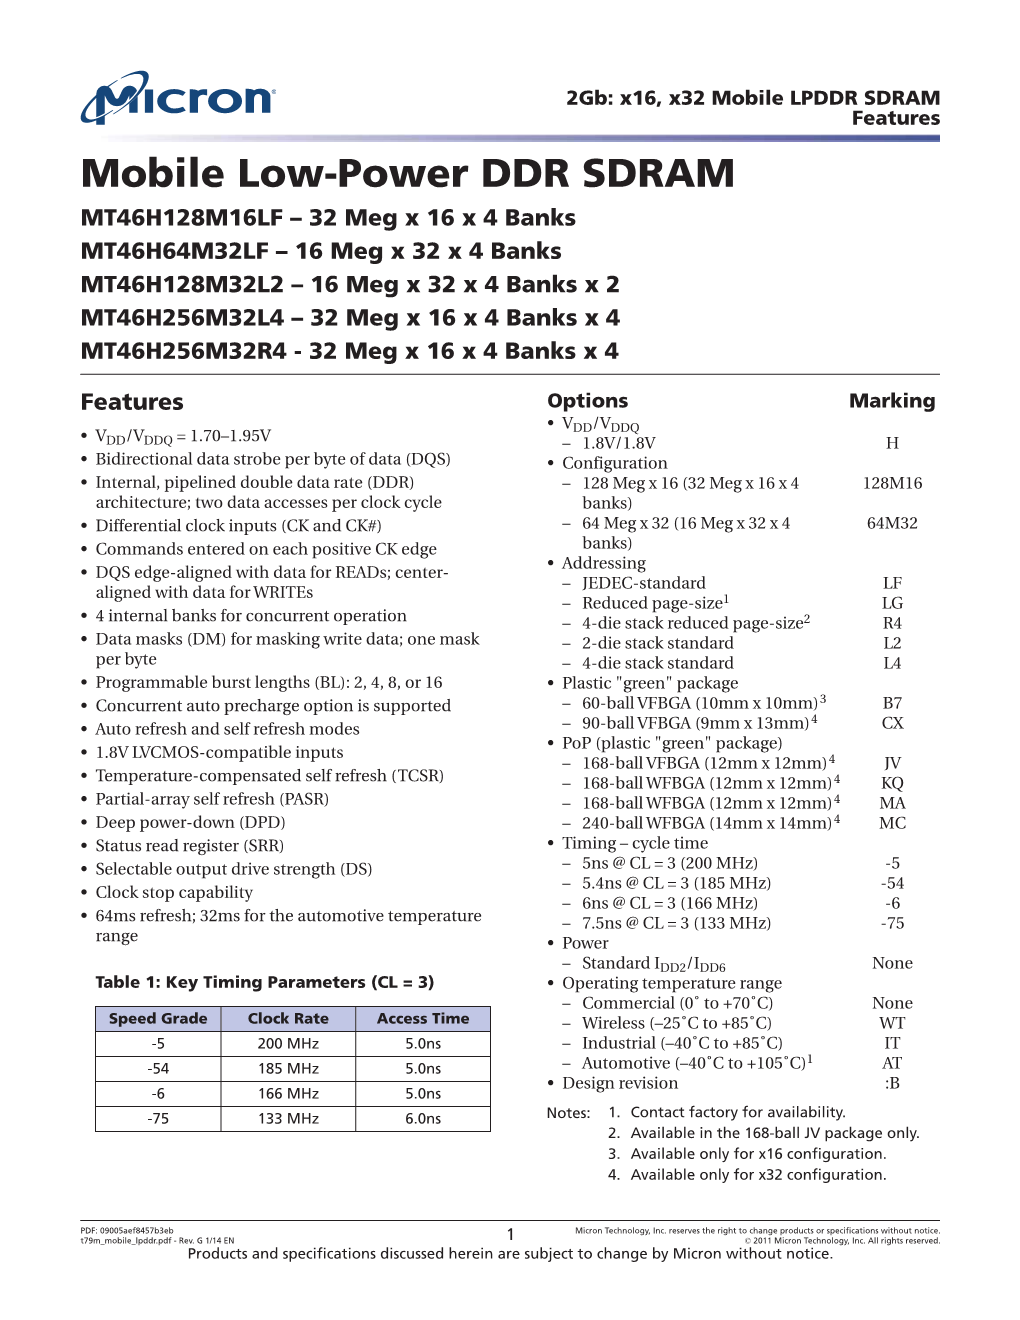 2Gb: X16, X32 Mobile LPDDR SDRAM